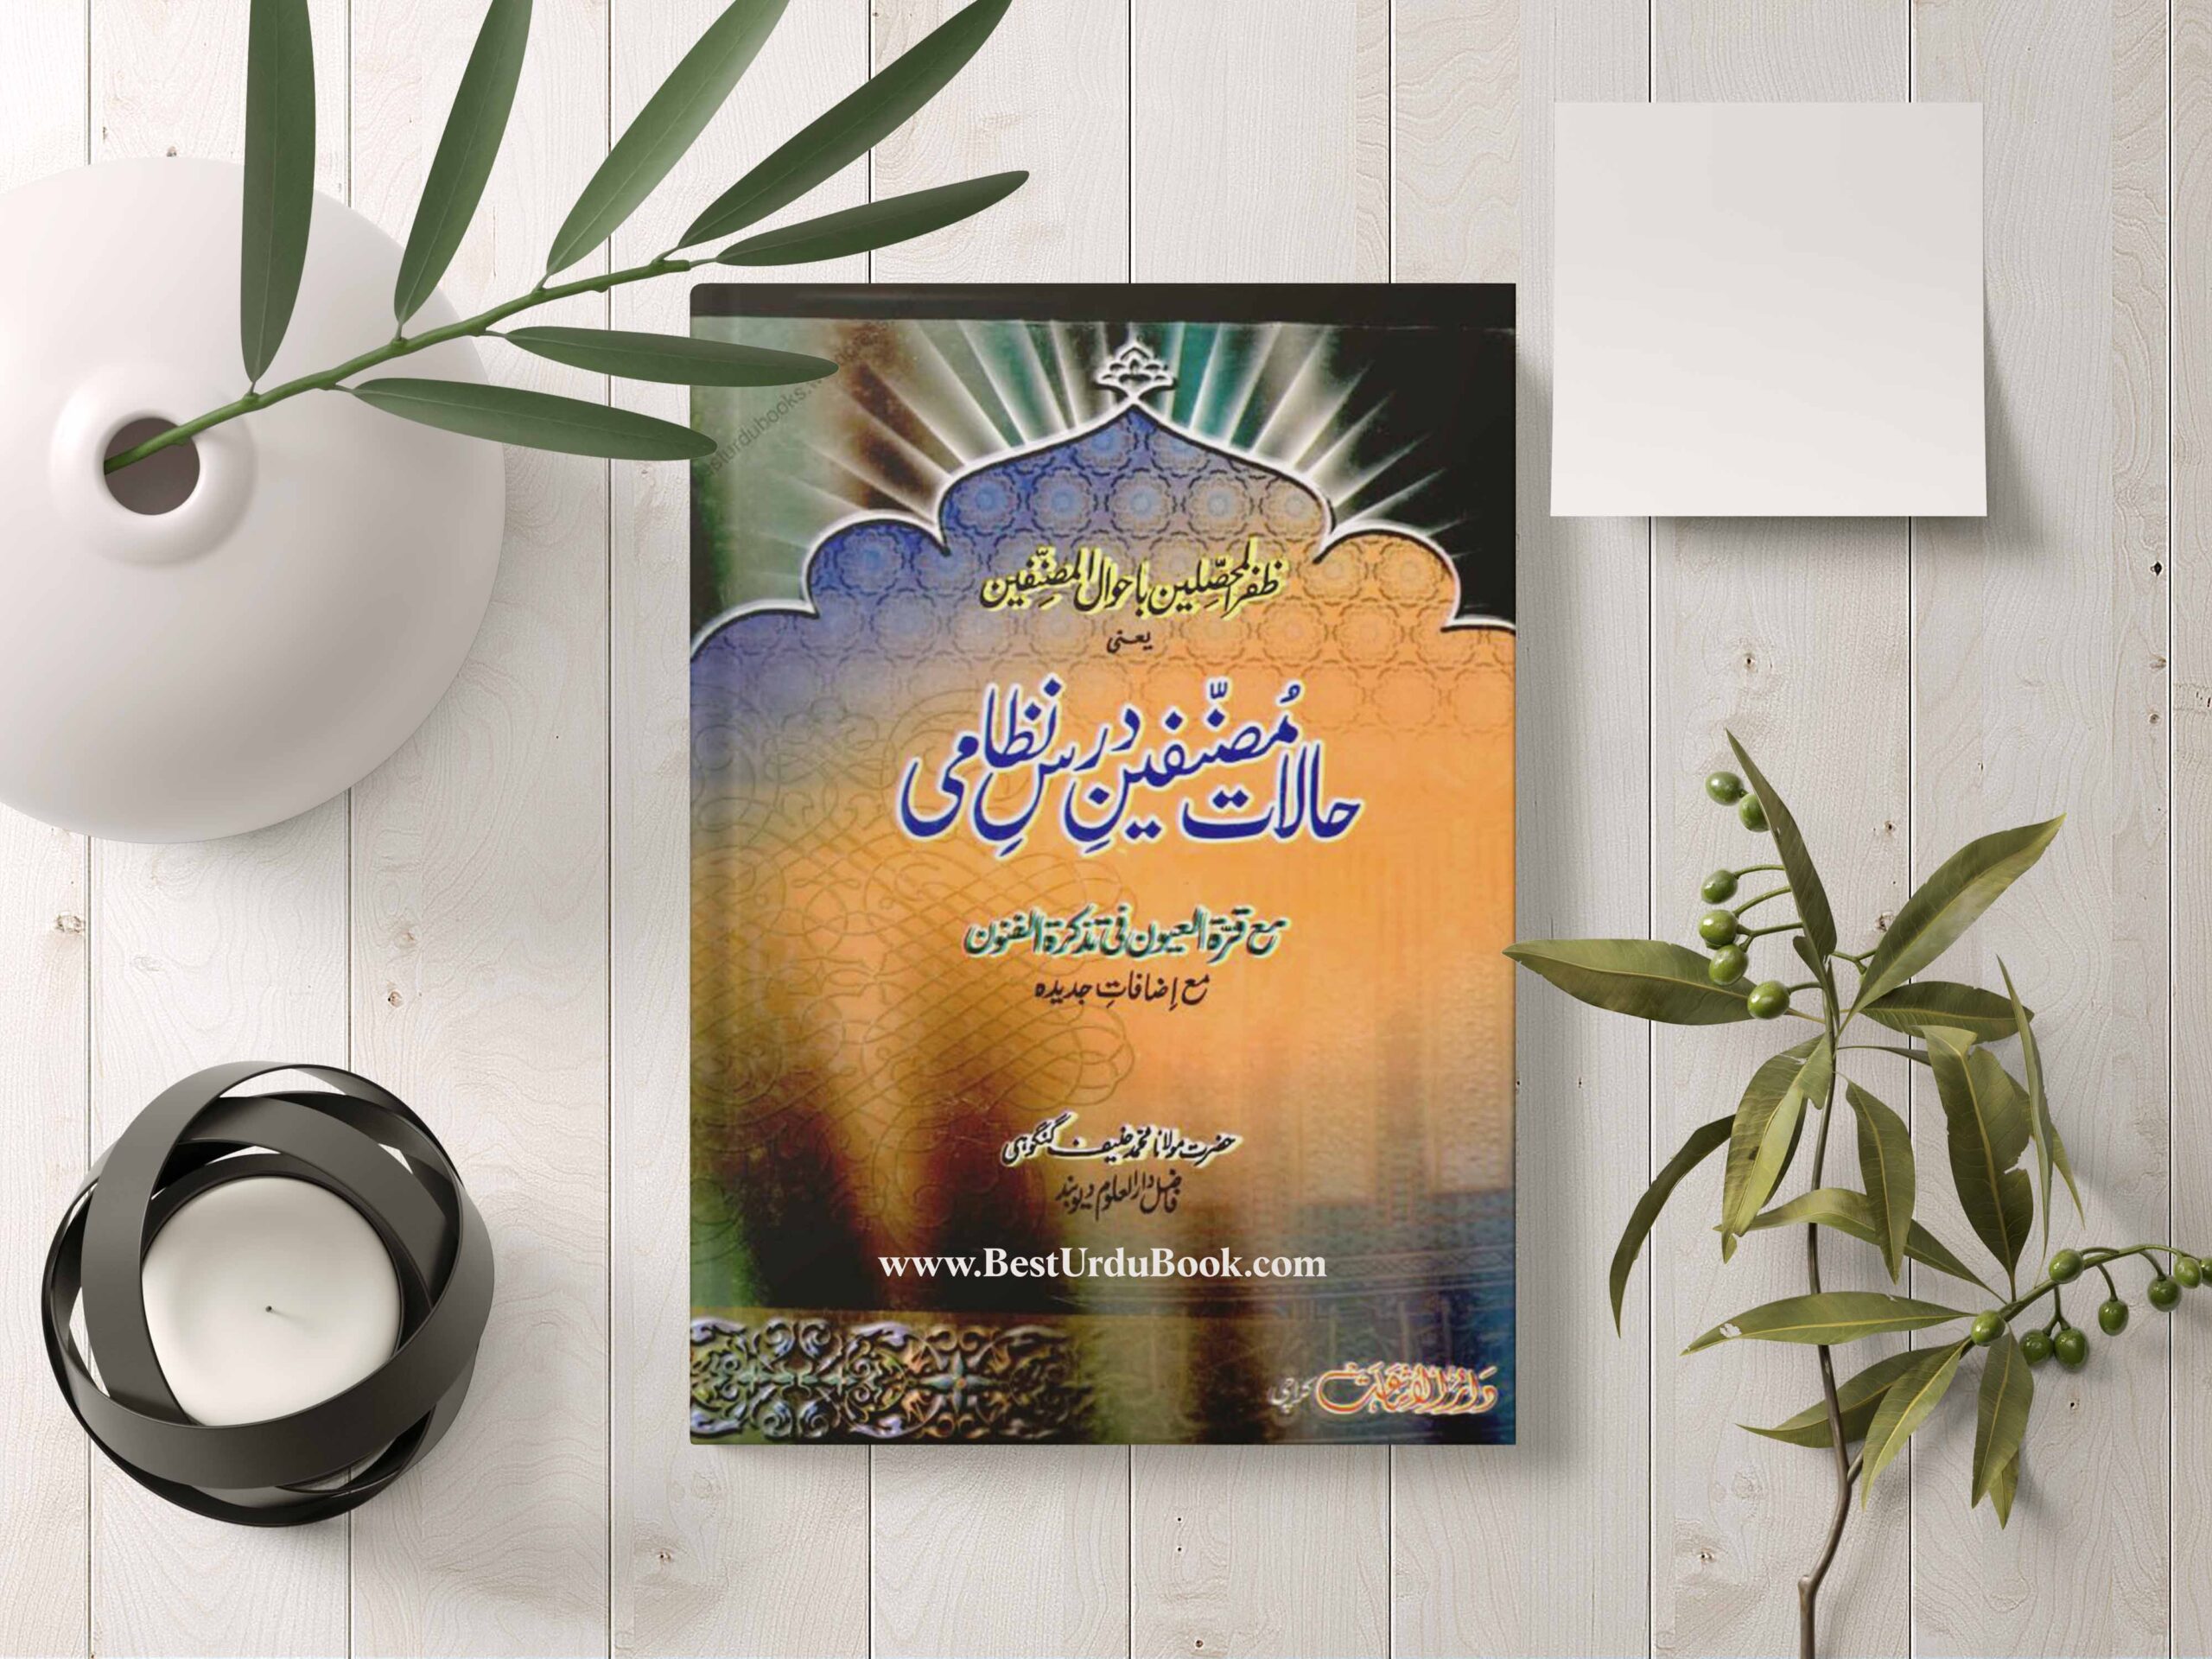 Halaat e Musannefeen-e-Dars Book Download In Urdu & pdf format